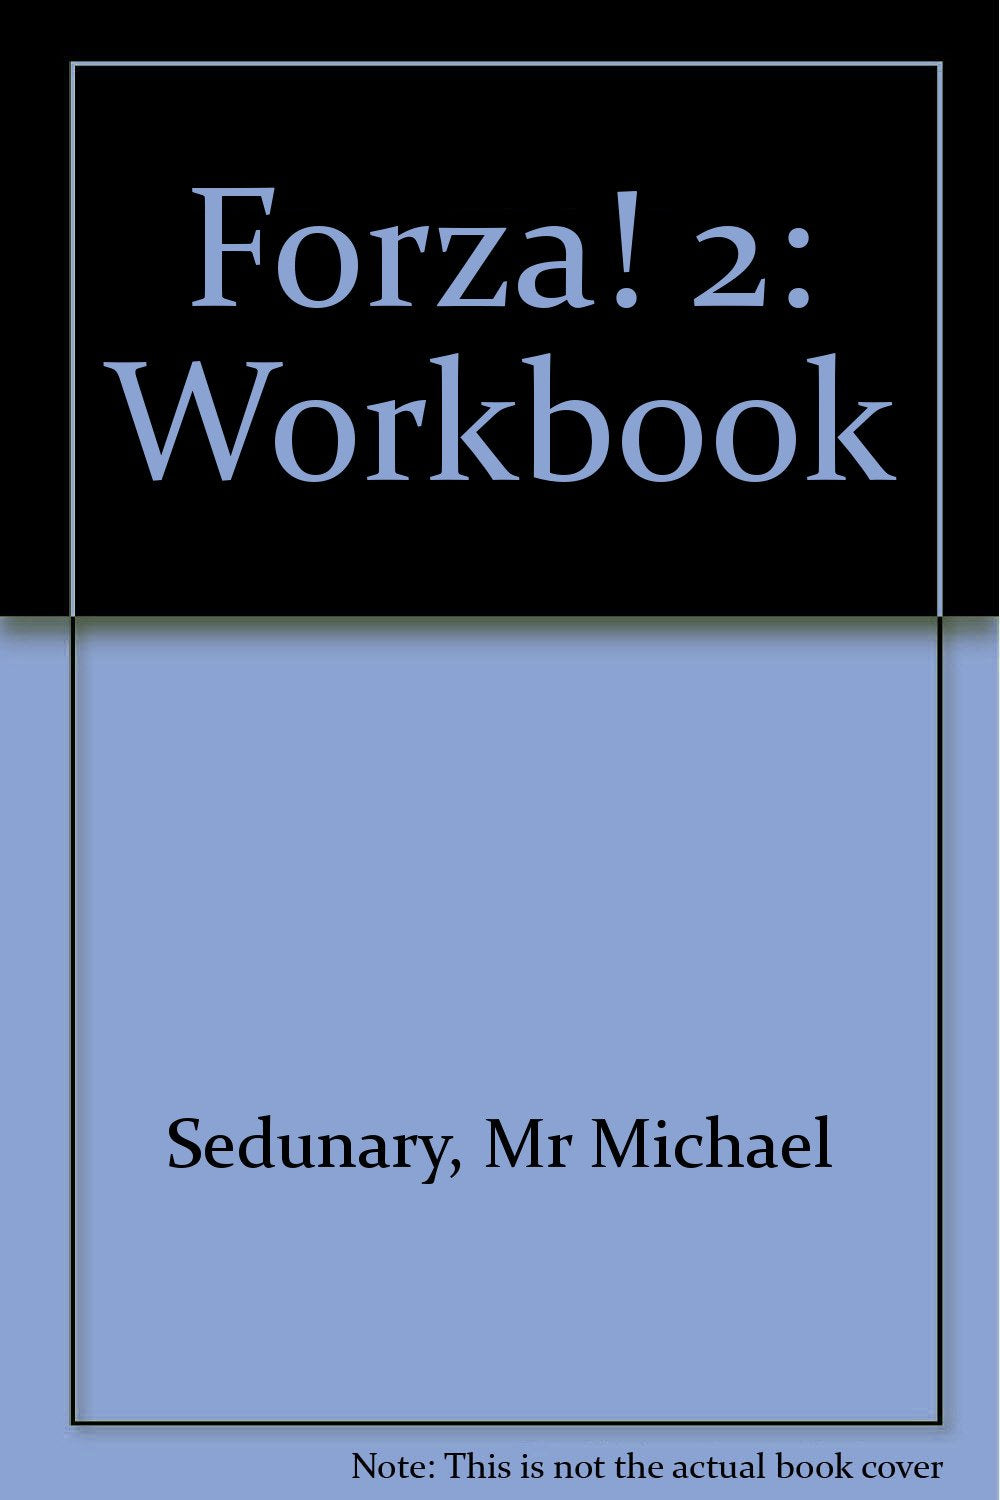 Forza Due Workbook NOW €2